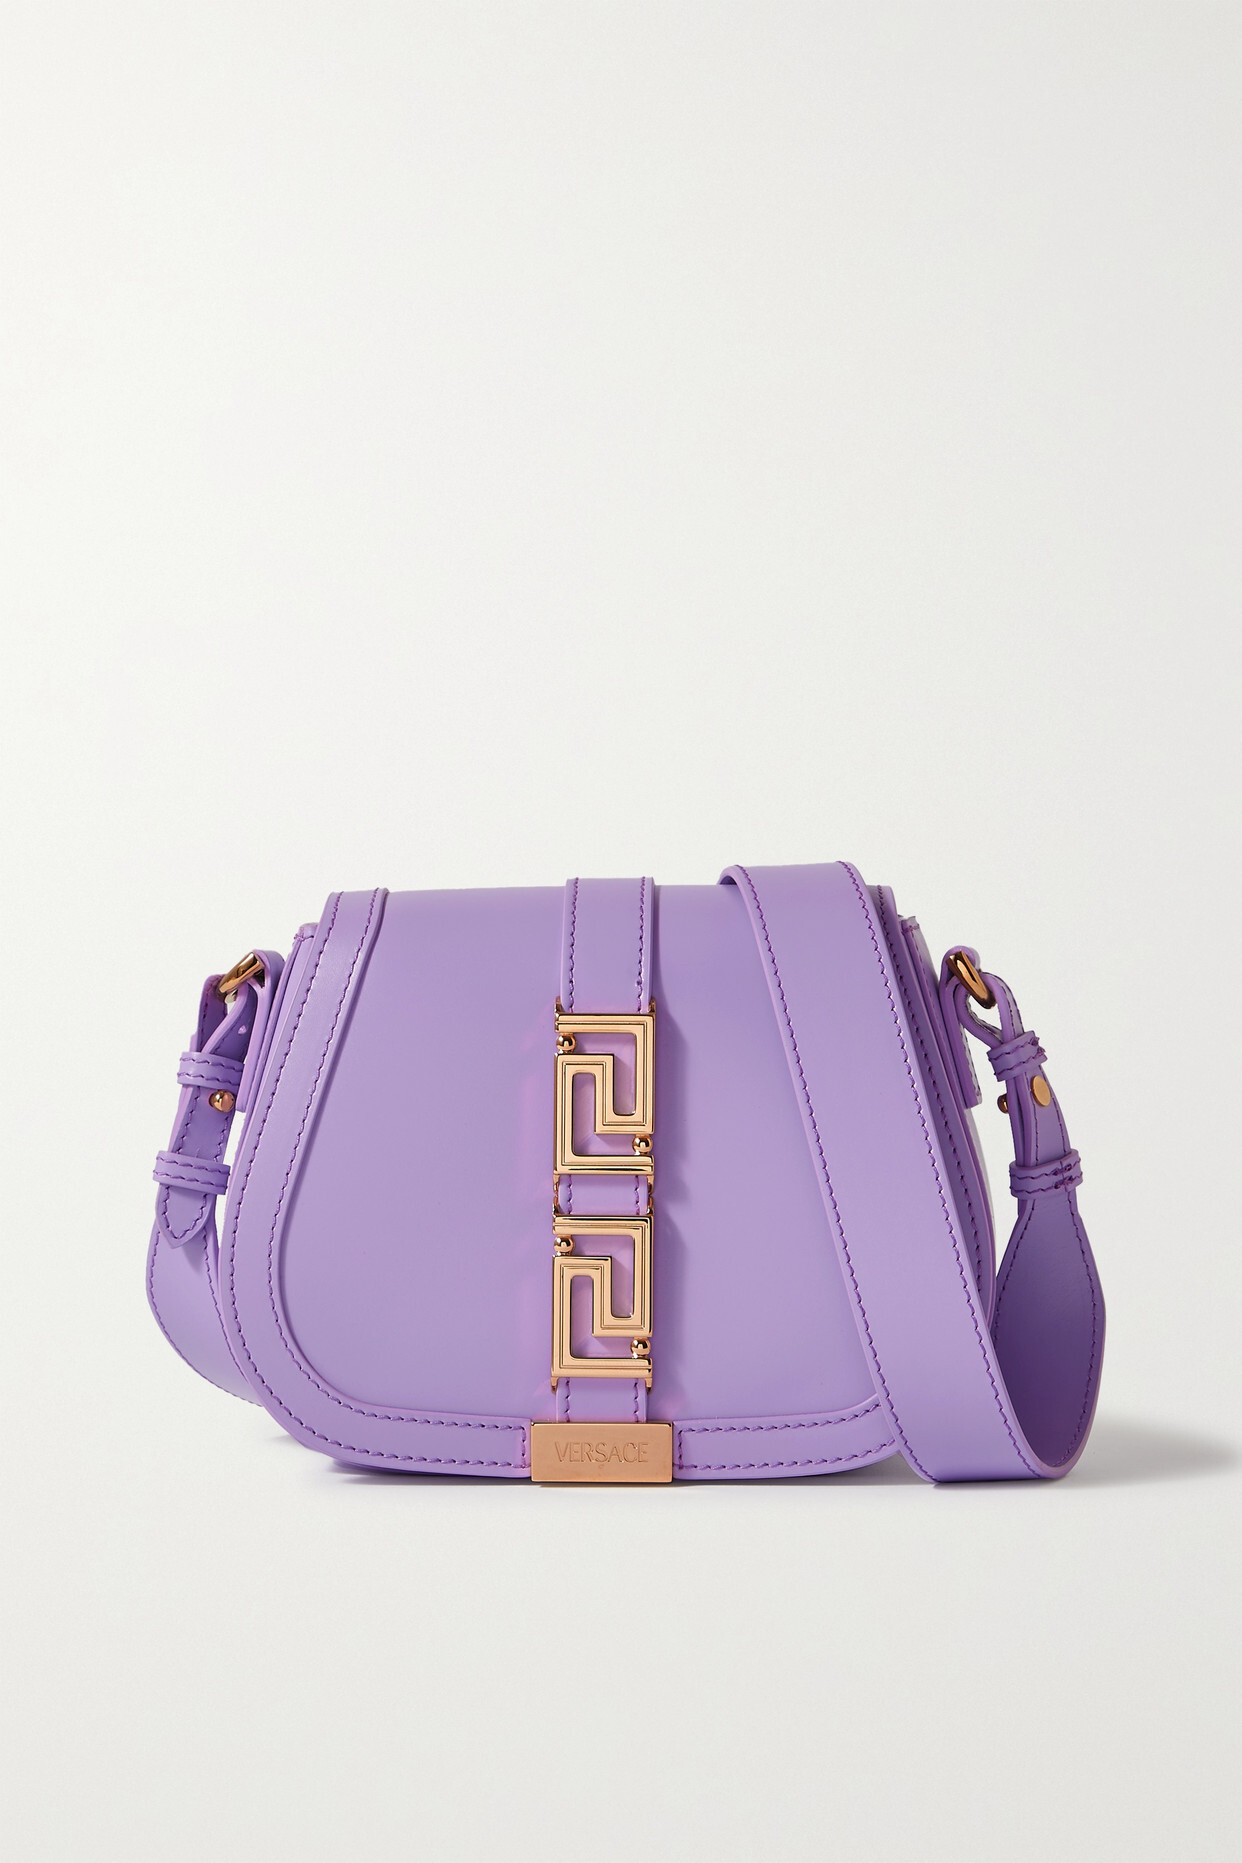 Versace - Small Leather Shoulder Bag - Purple